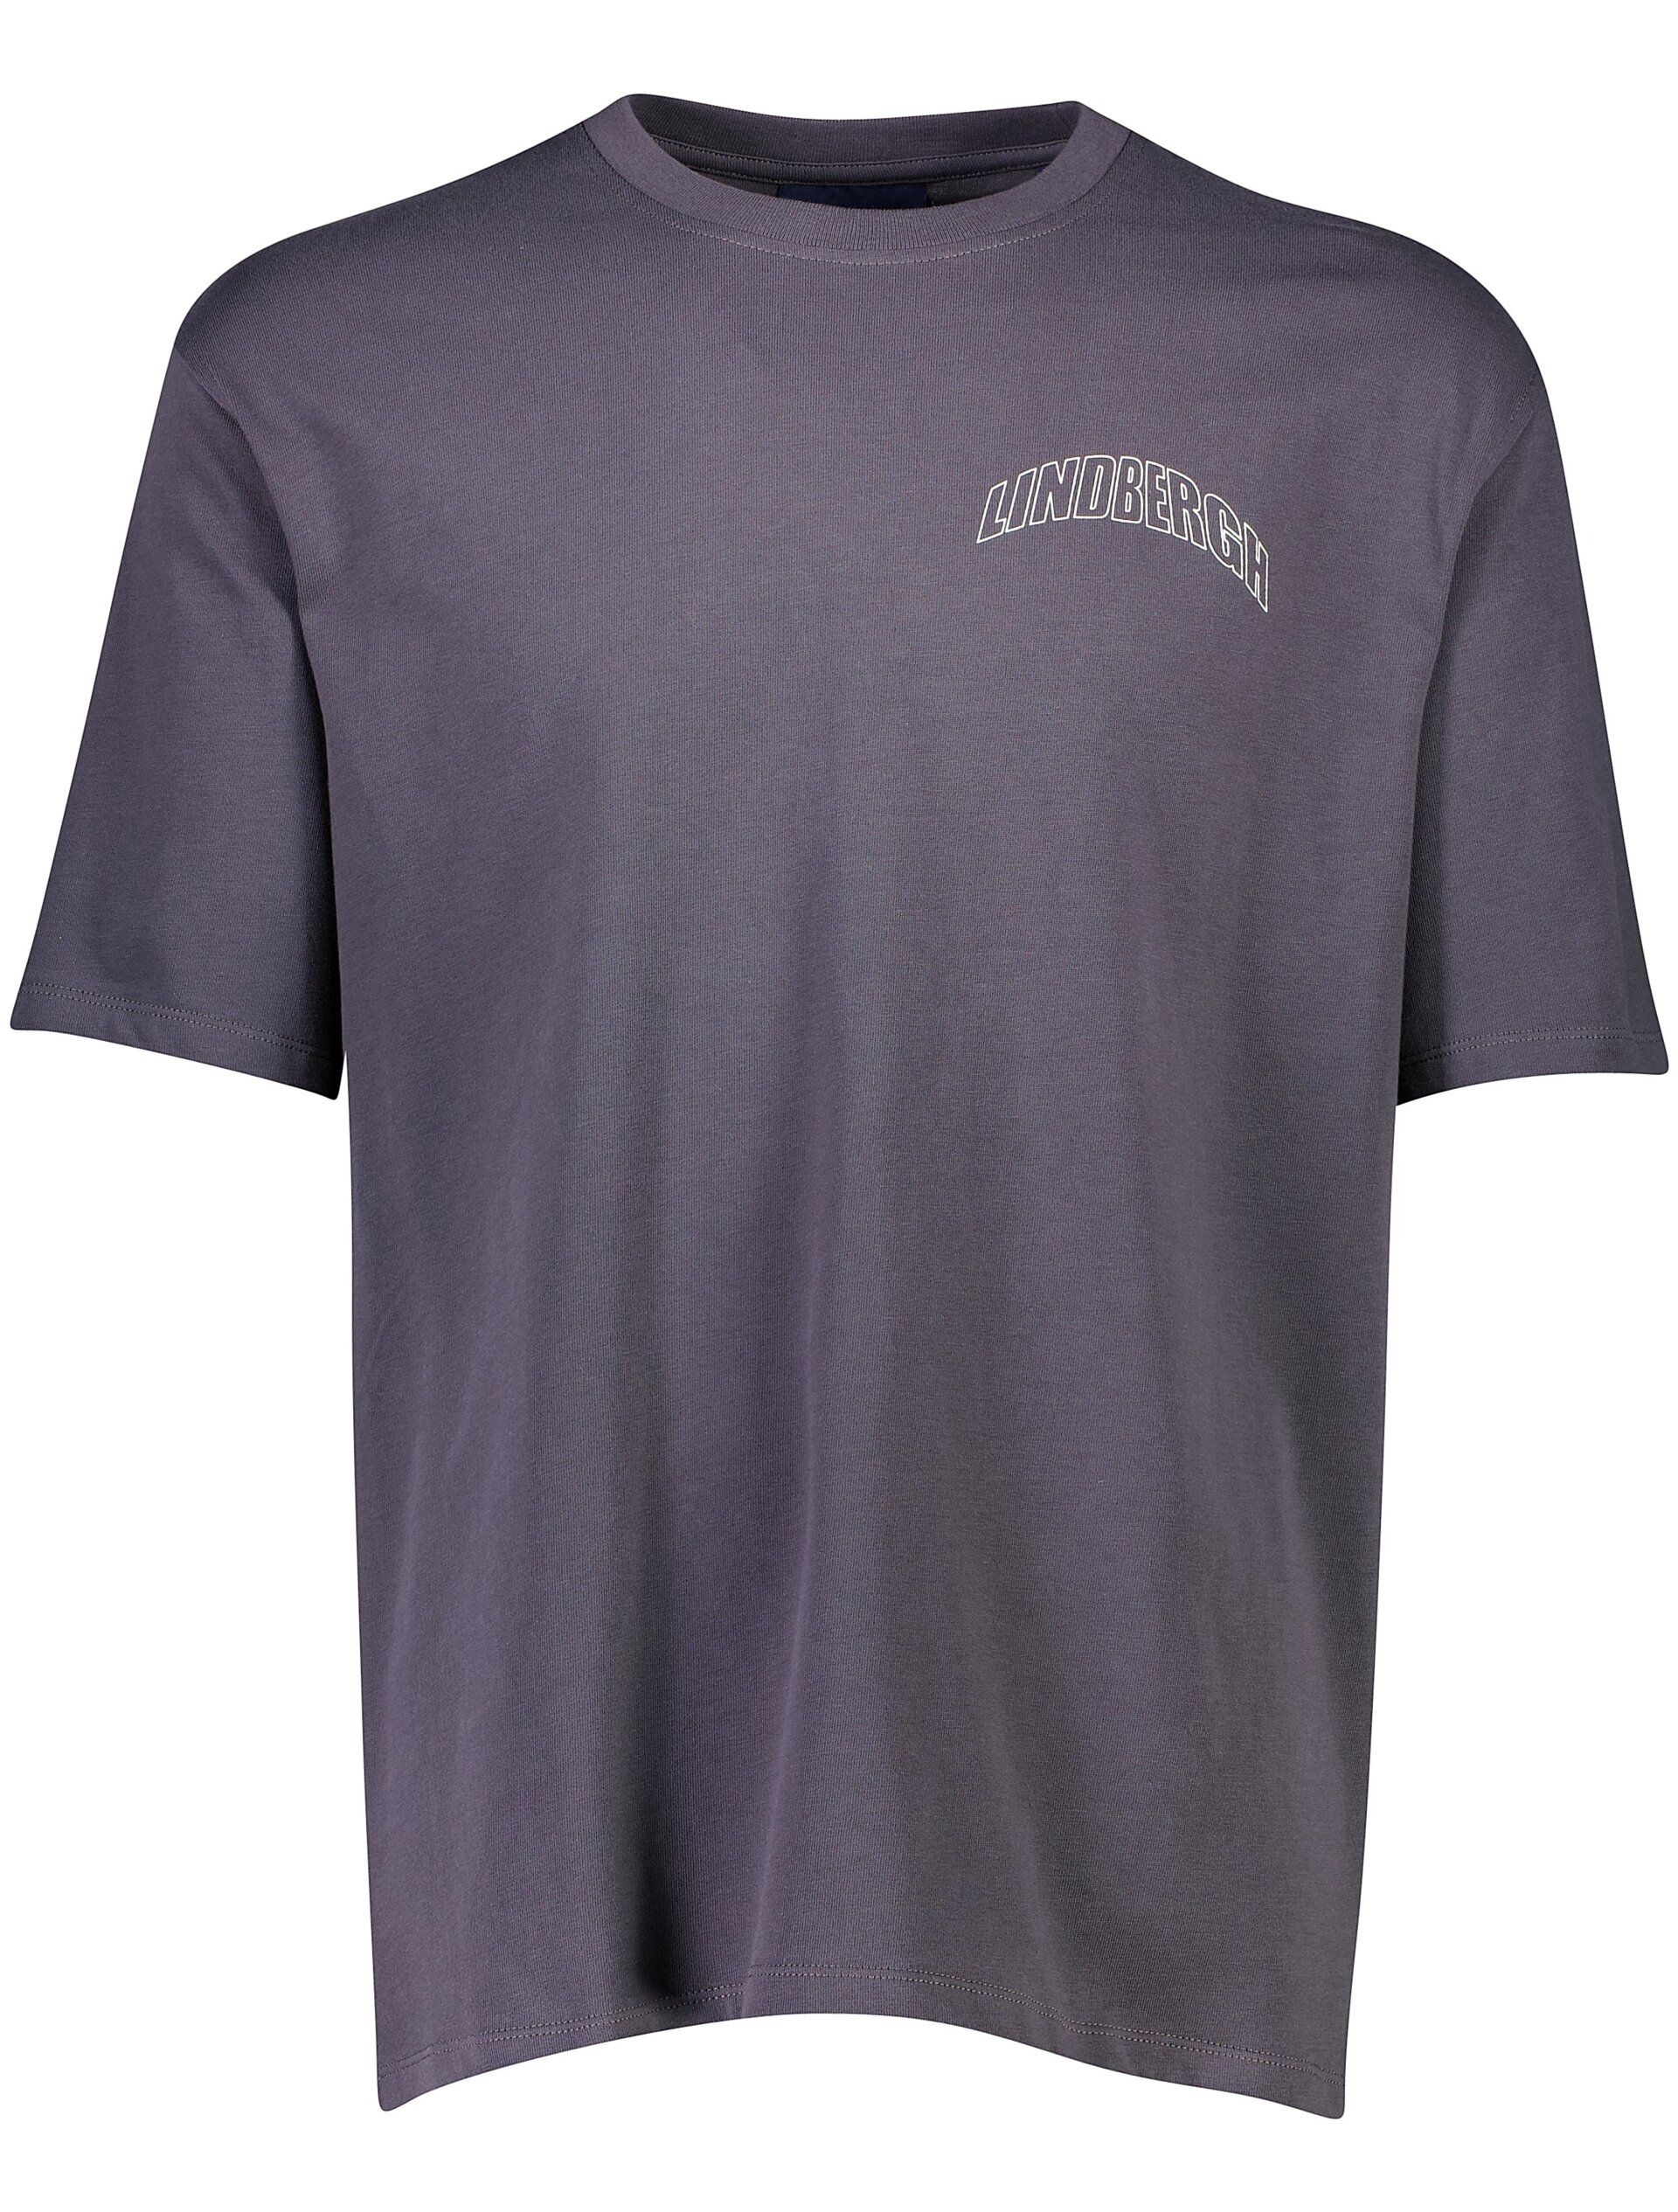 Lindbergh T-shirt grijs / charcoal